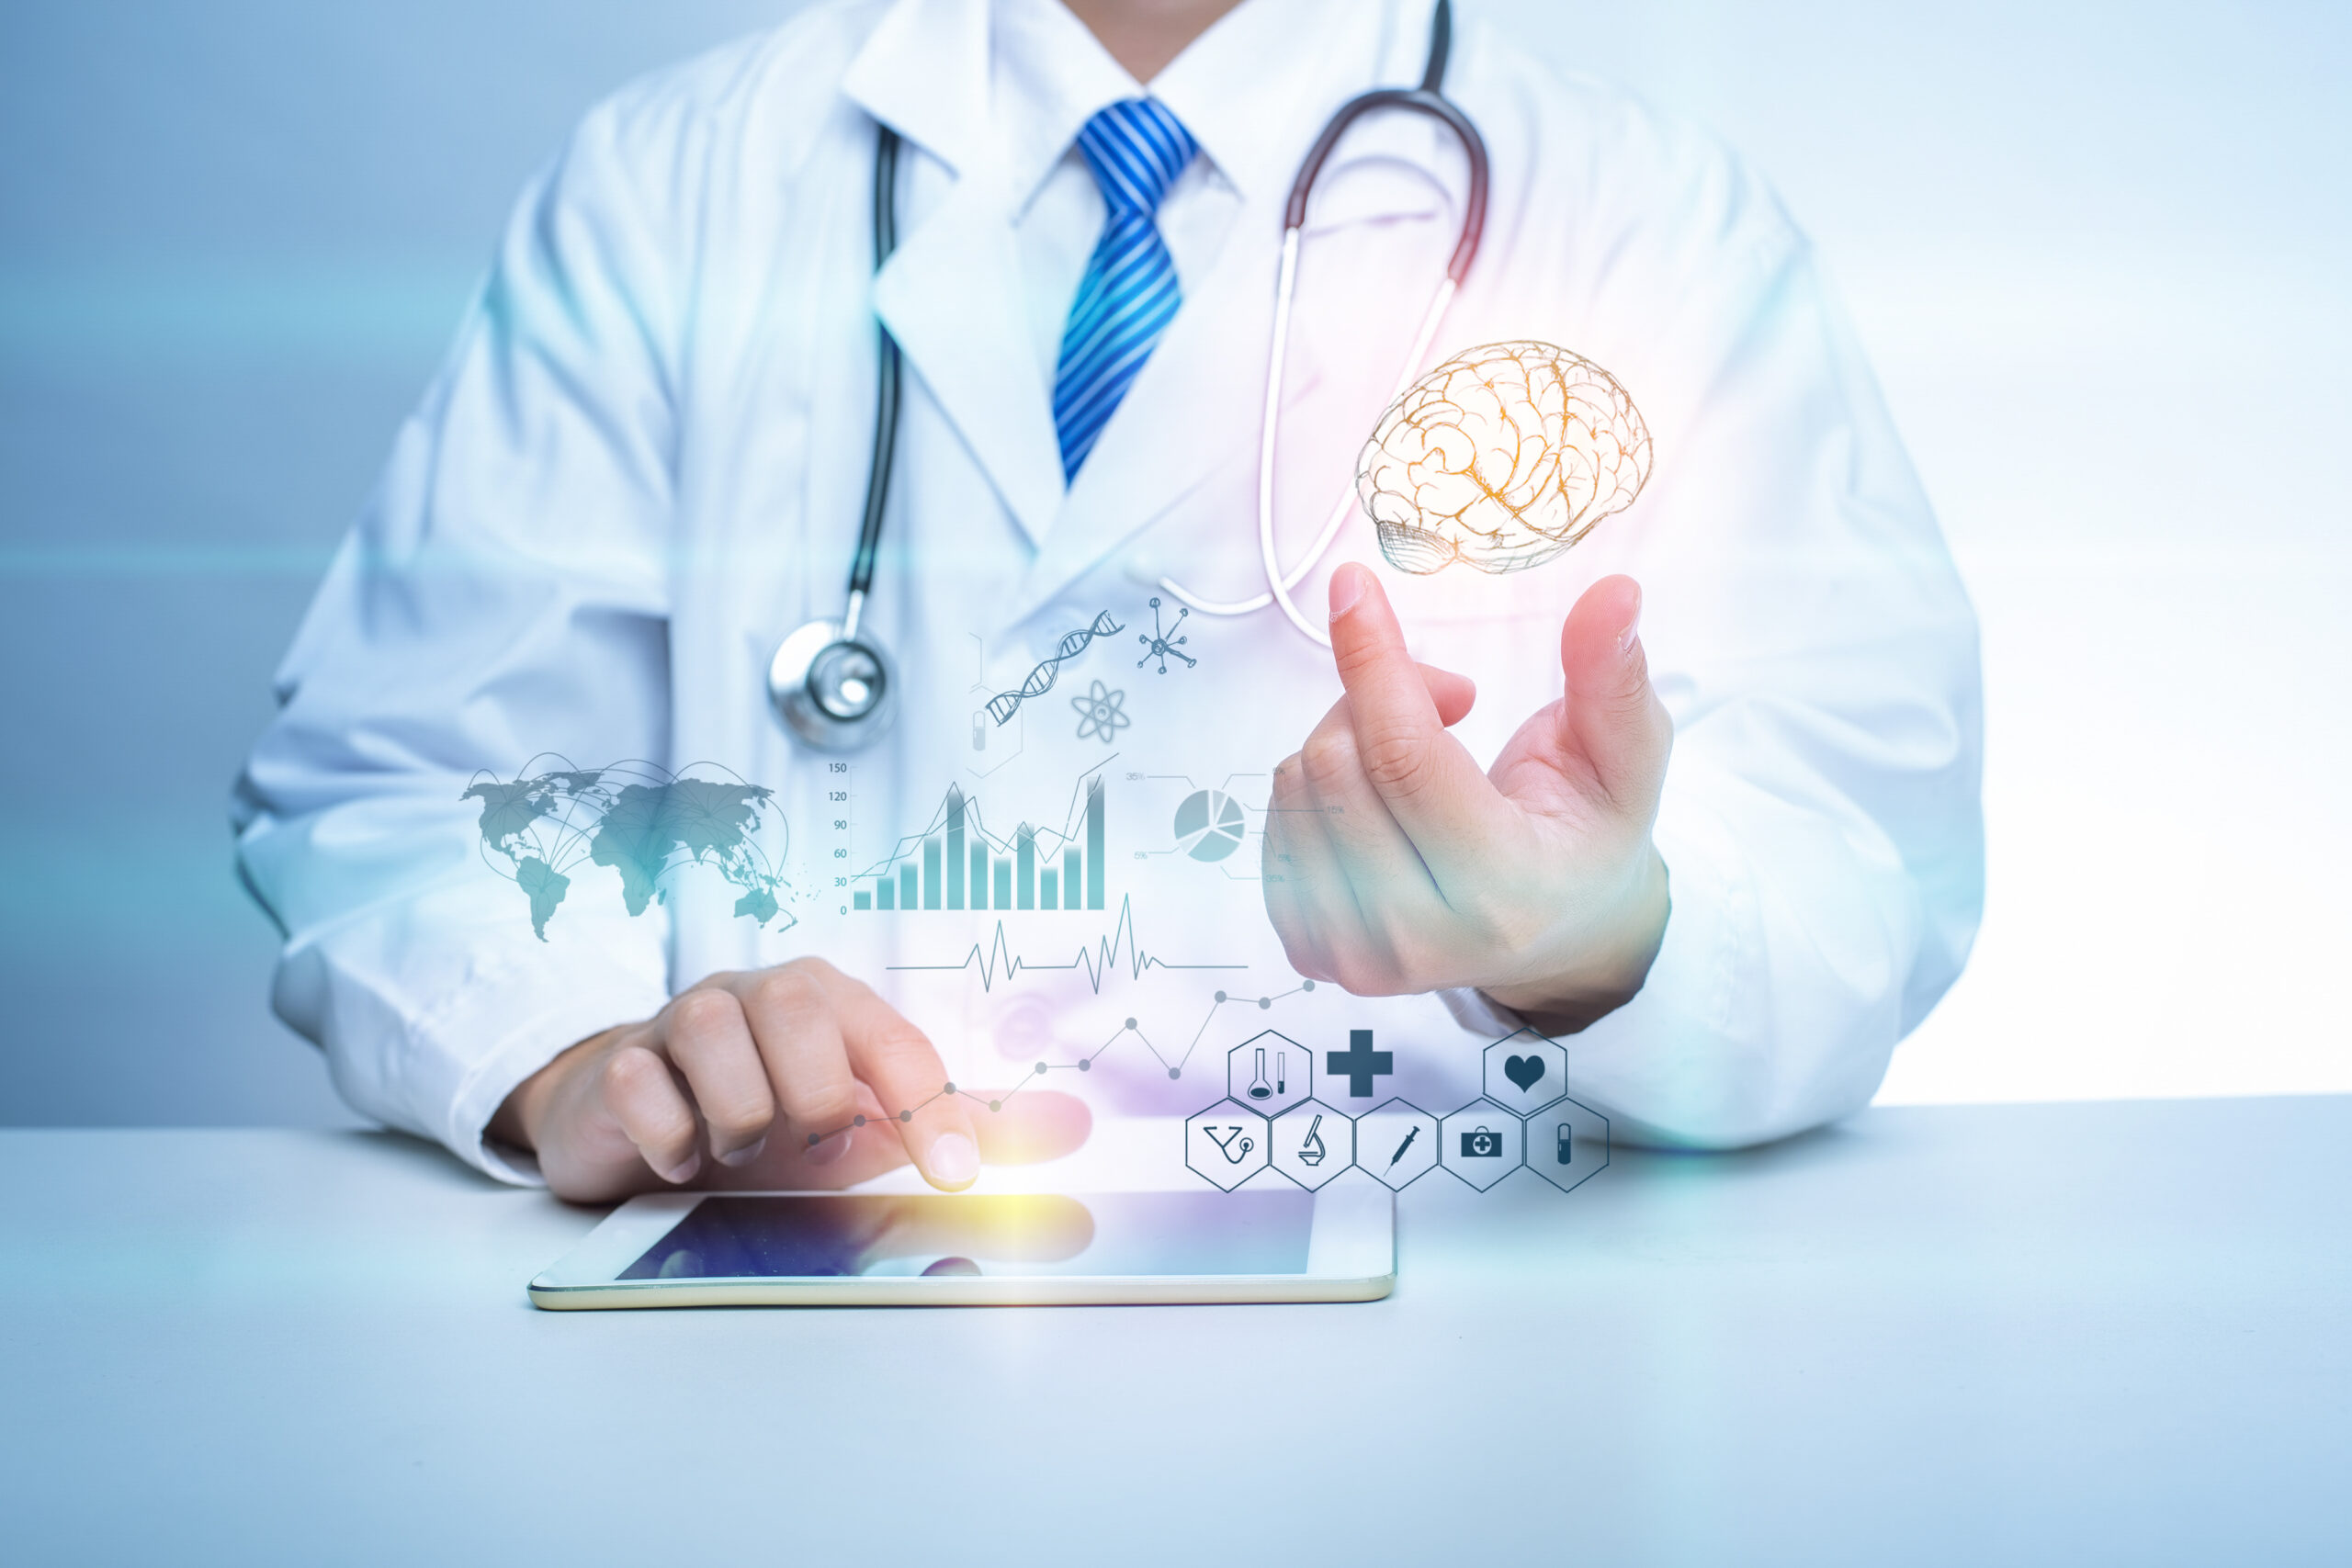 Benefits of Big Data Analytics in Healthcare